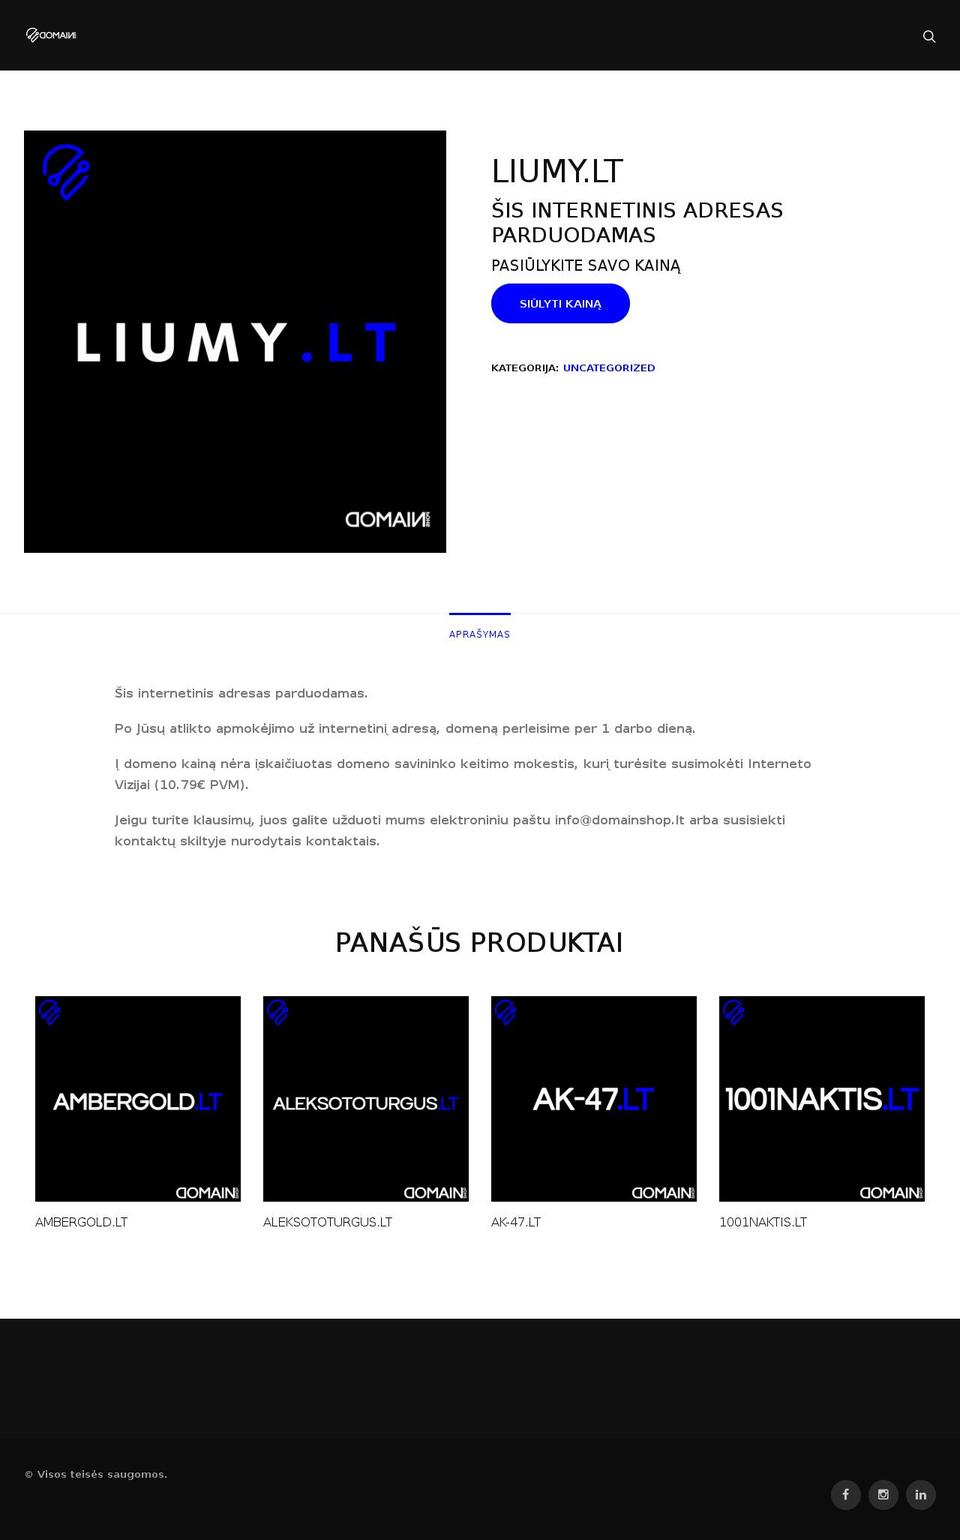 liumy.lt shopify website screenshot